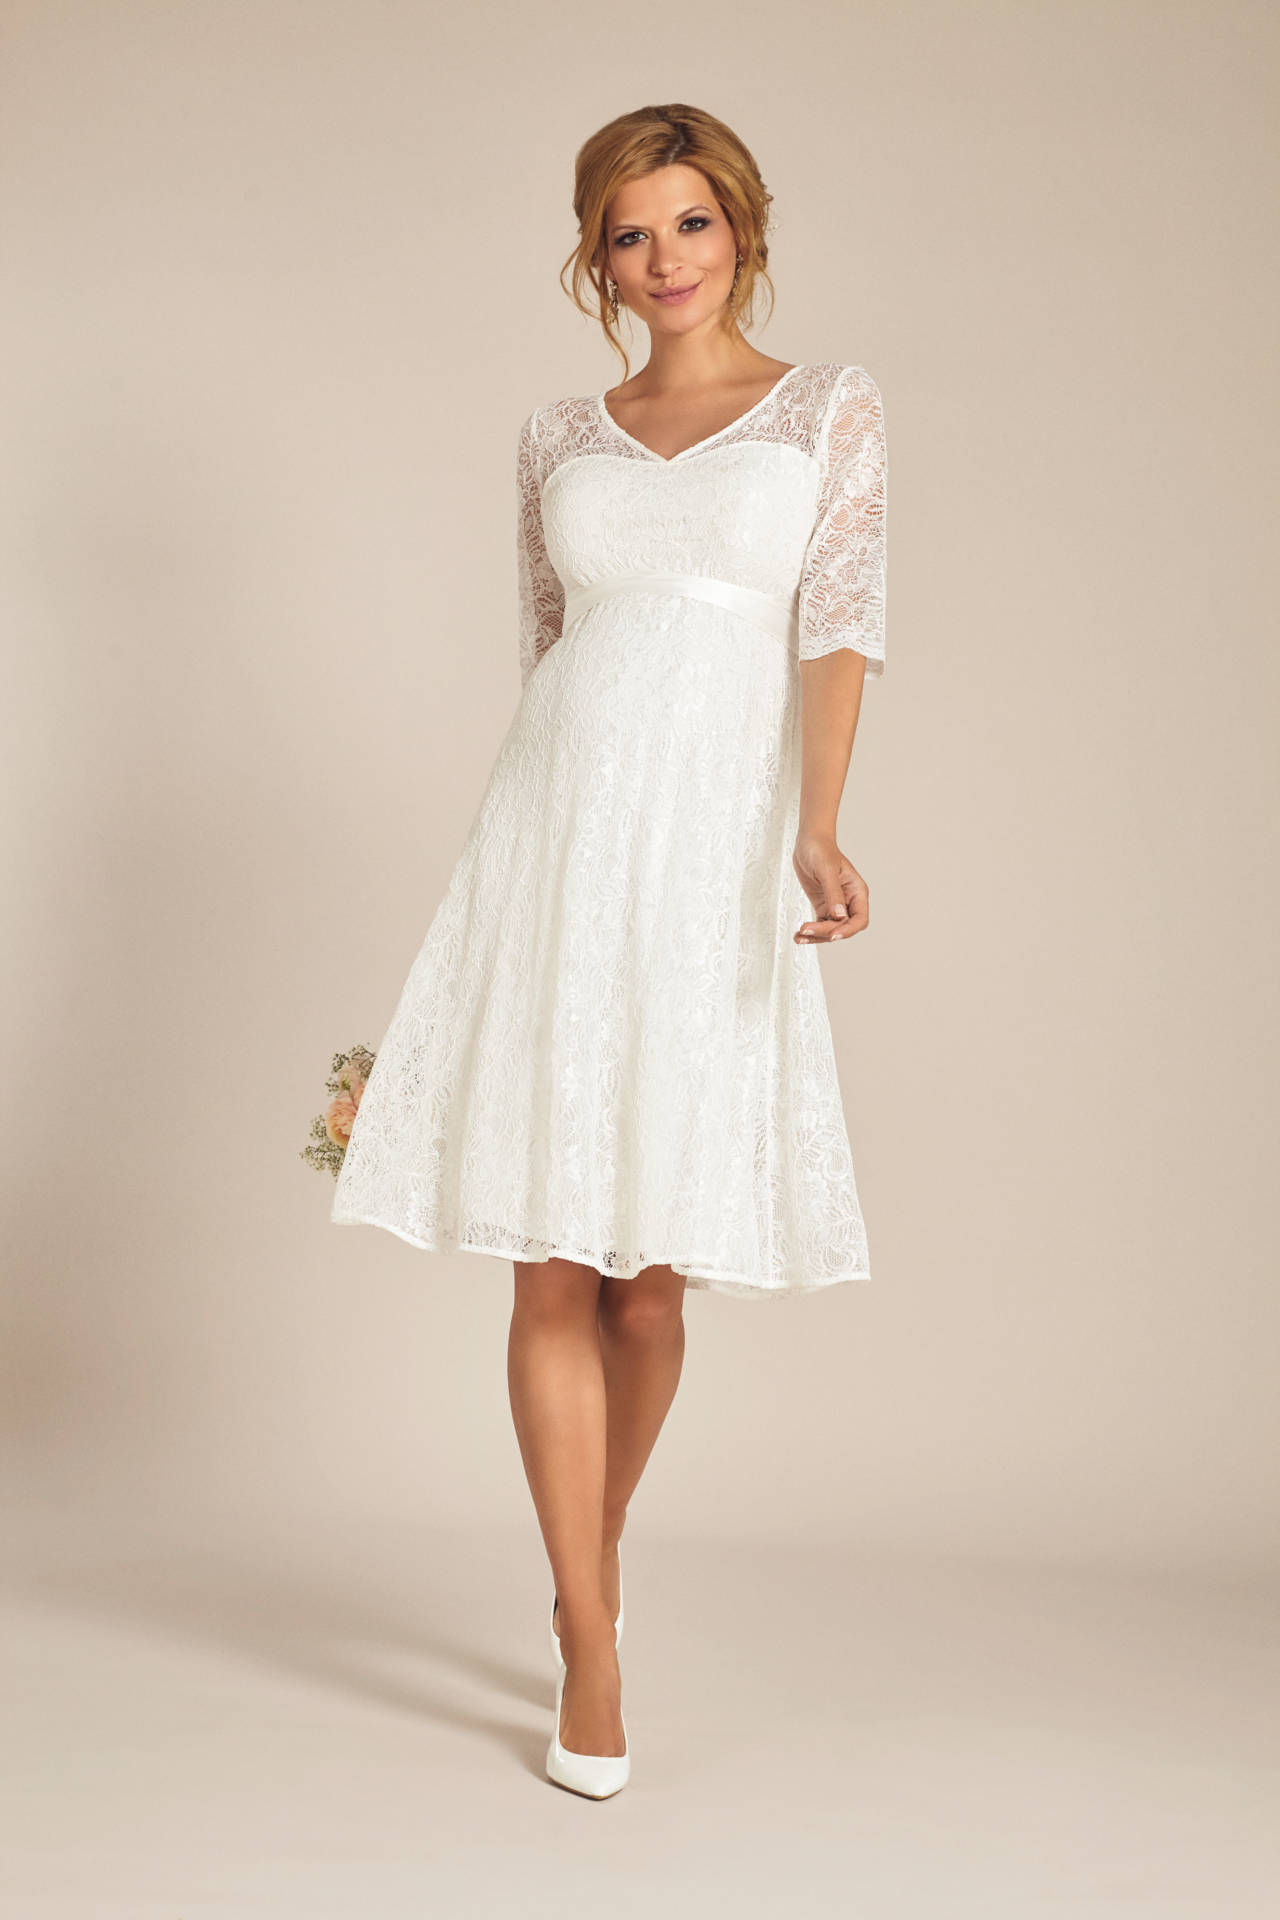 Flossie Maternity Lace Wedding Dress Short